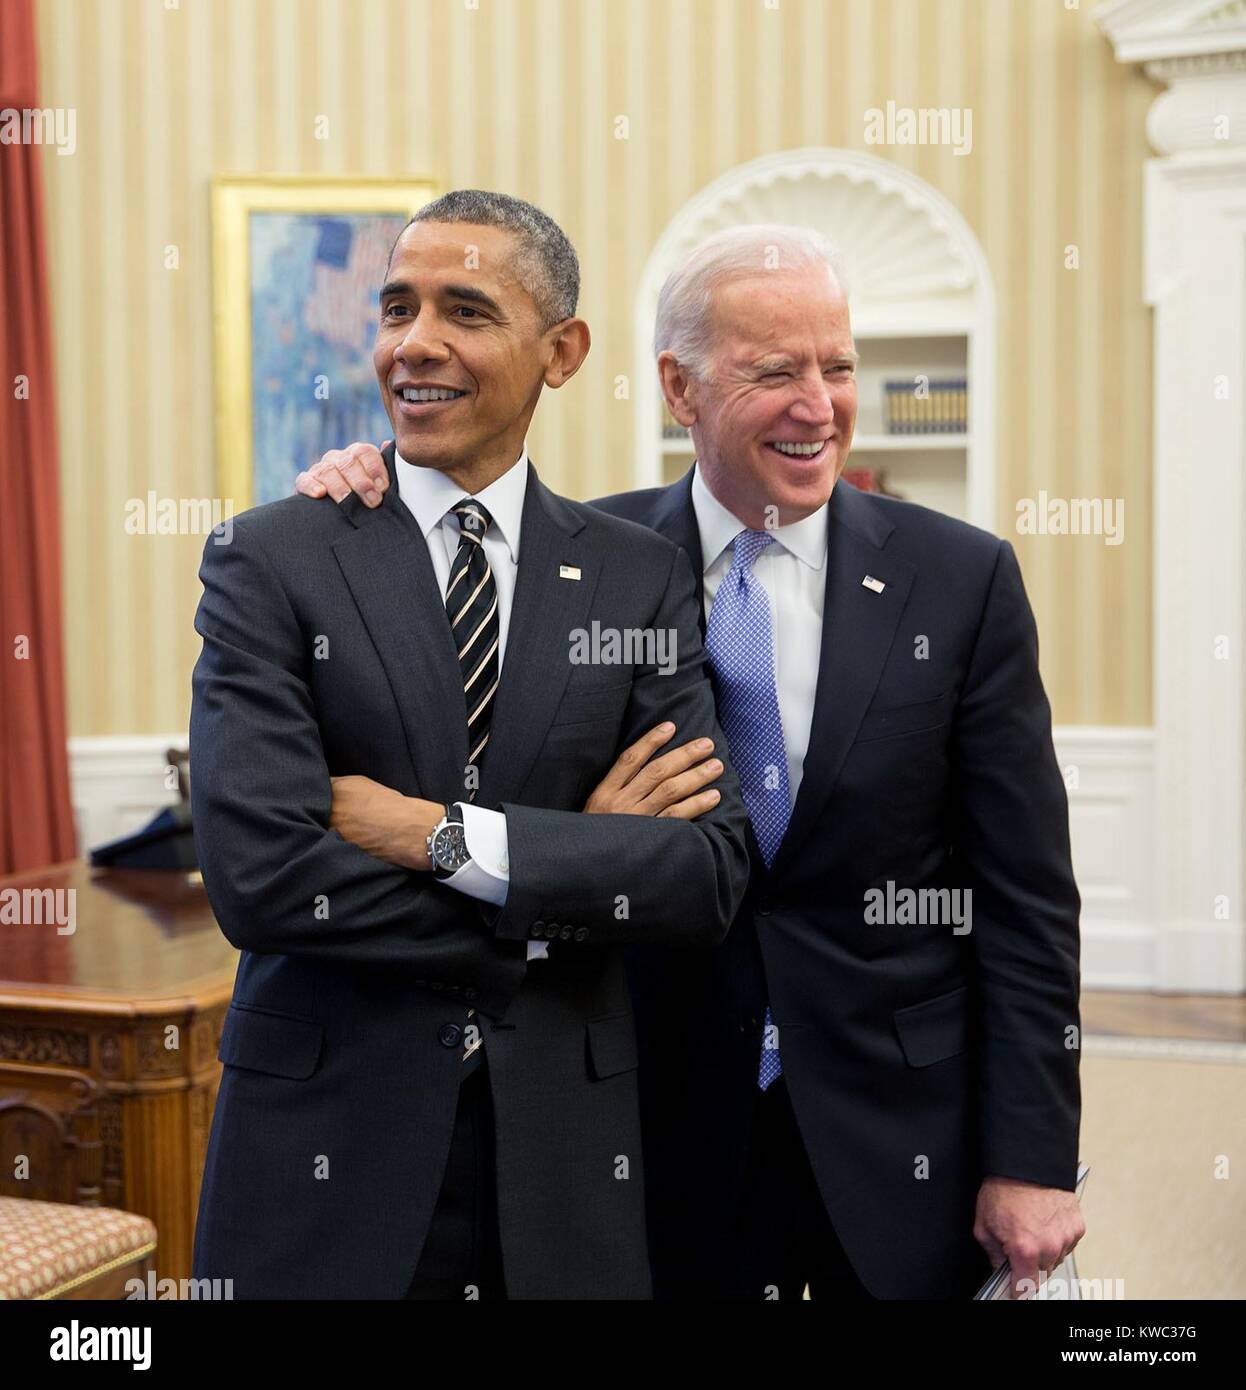 President Barack Obama and Vice President Joe Biden in the Oval Office, Feb. 9, 2015. (BSLOC 2015 13 240) Stock Photo